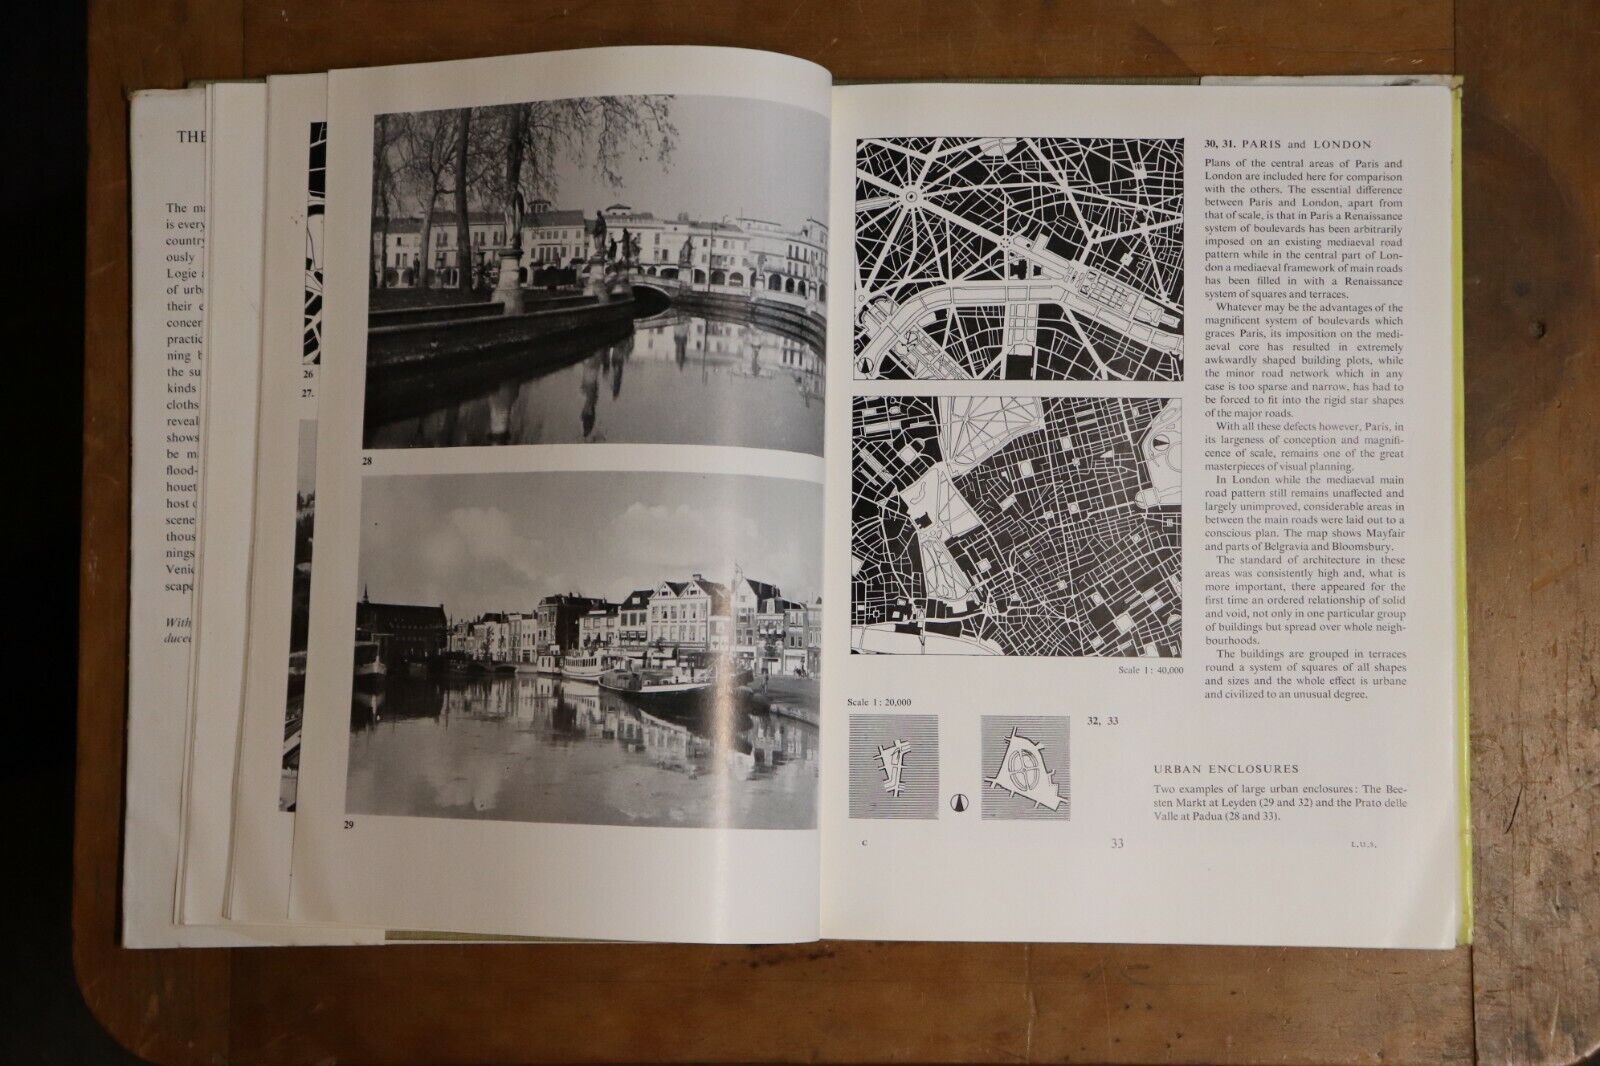 The Urban Scene by Gordon Logie - 1954 - Town Planning & Architecture Book